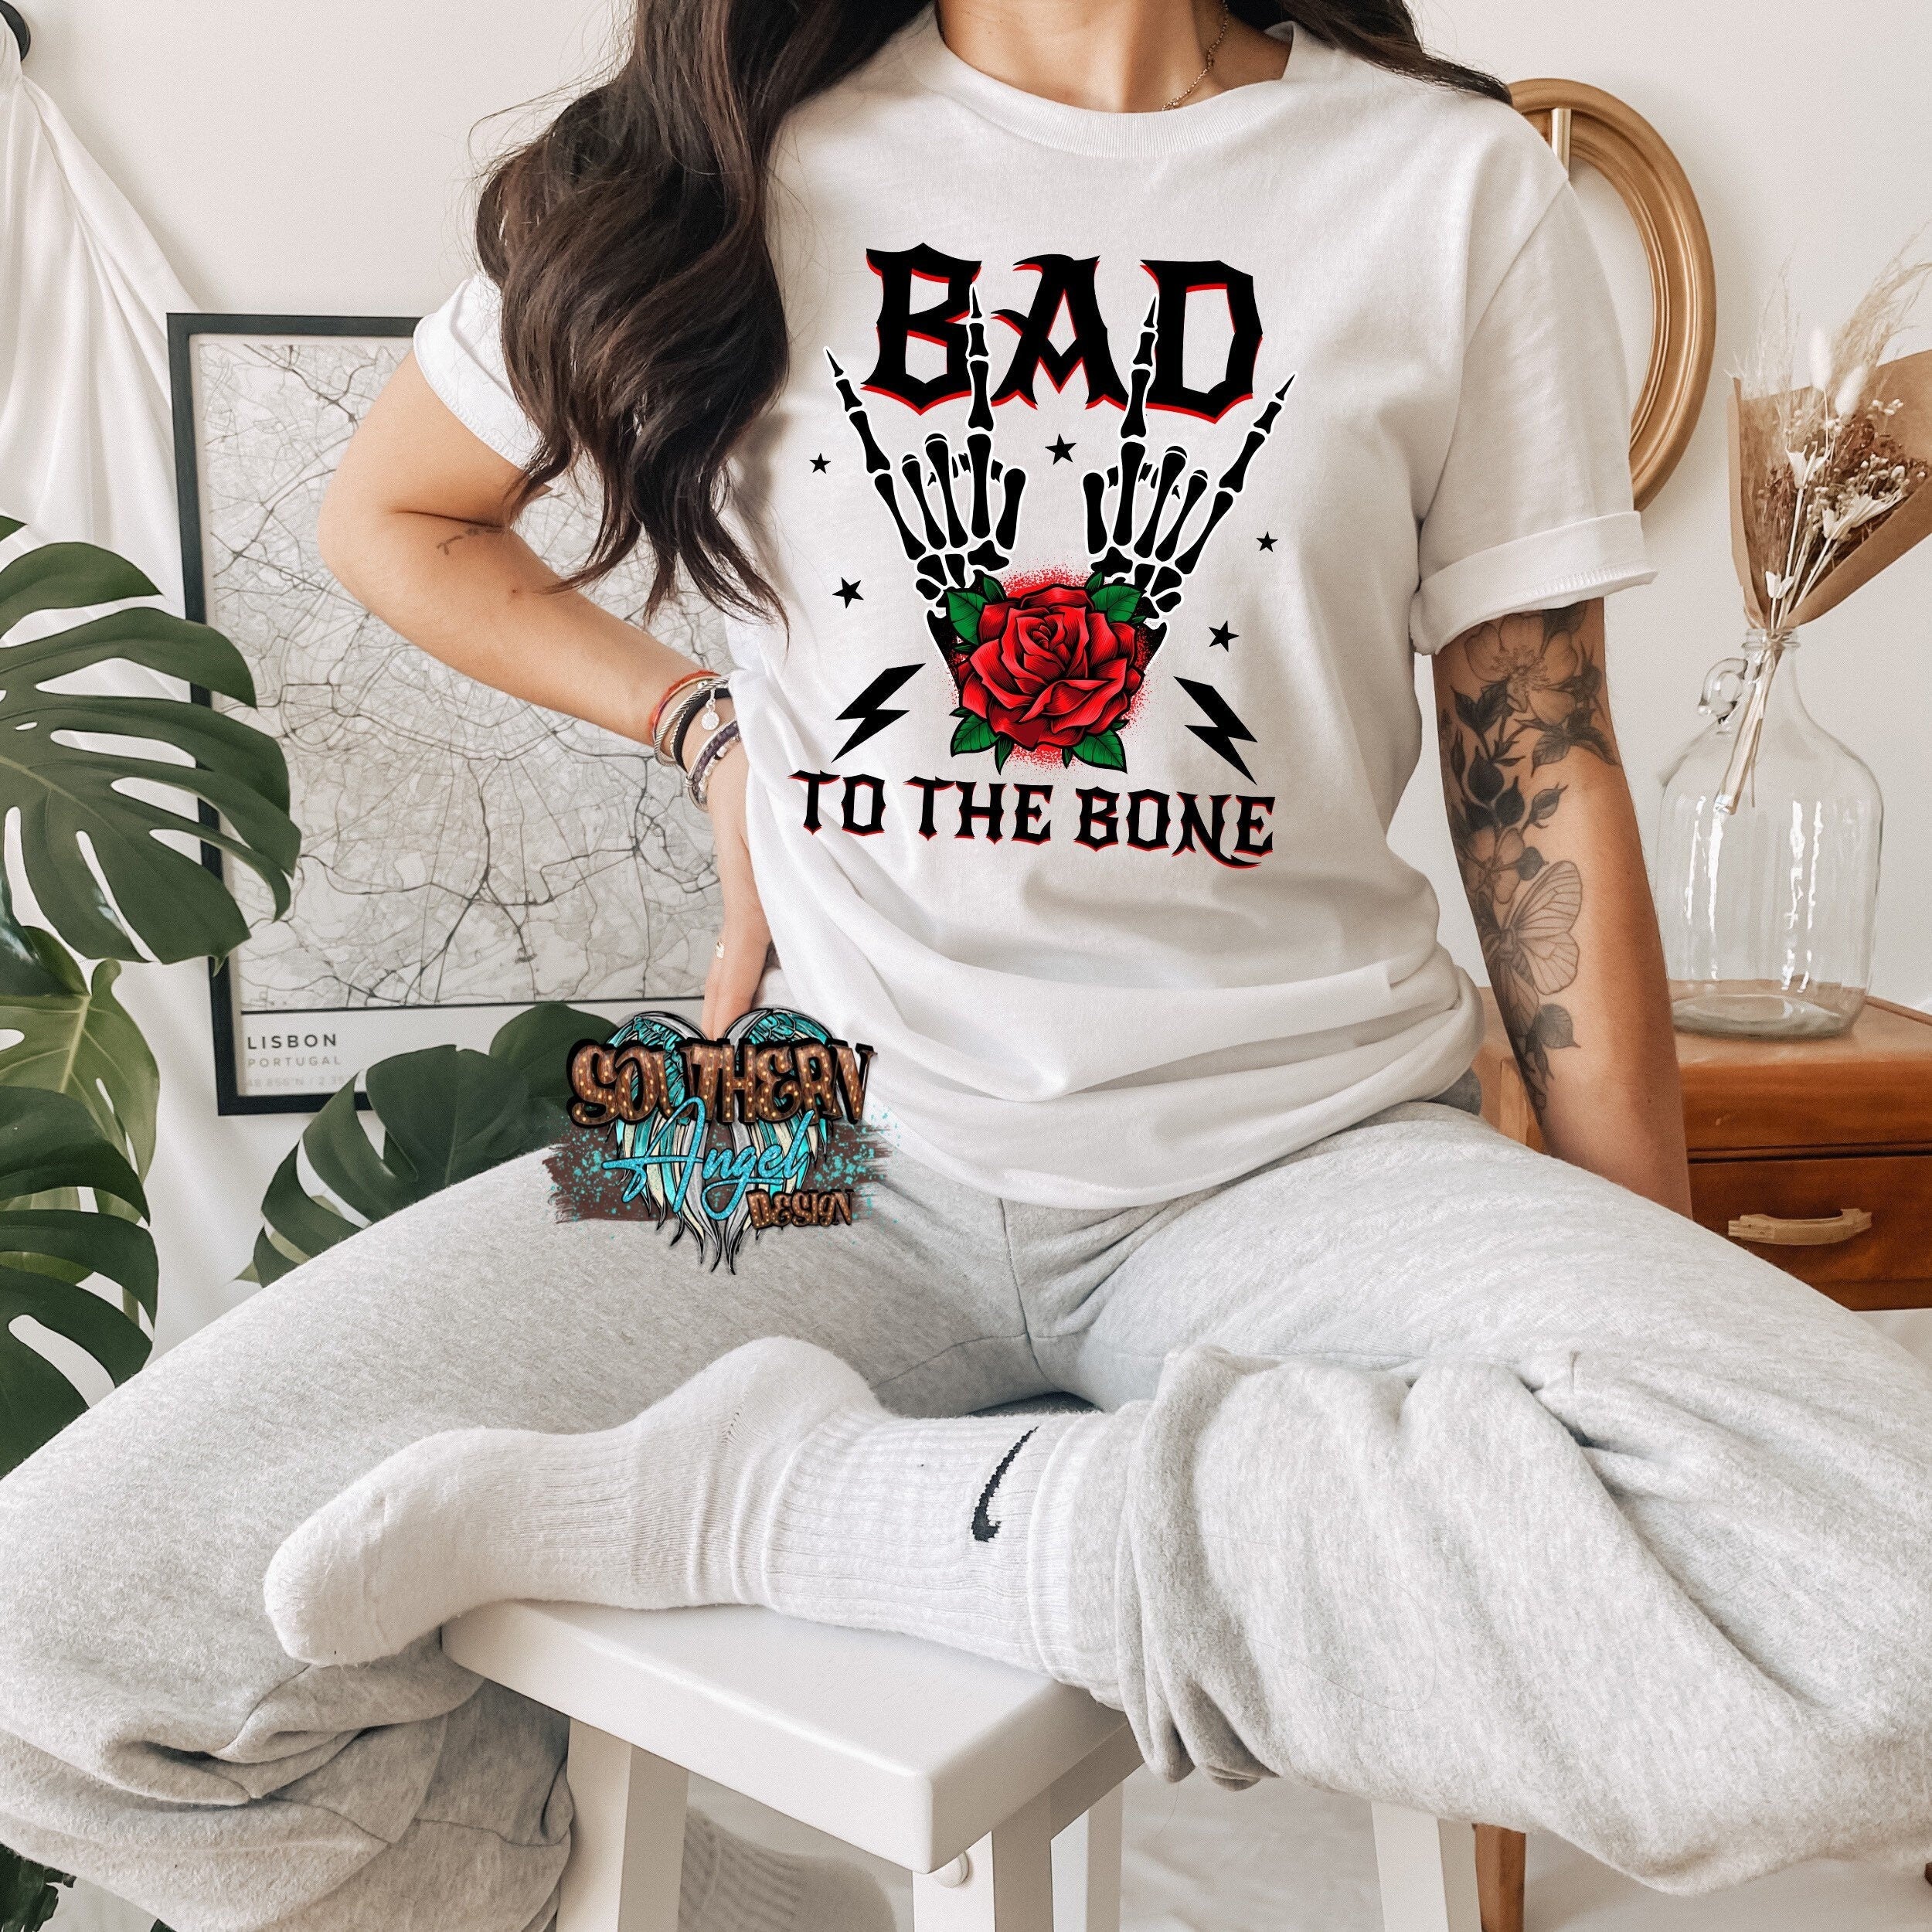 Bad To The Bone Shirt, Skeleton HandShirt. Skeleton Shirt, Bone Shirt, SpookyShirt, Rock And Roll Shirt, Rock Shirt, Skeleton Shirt